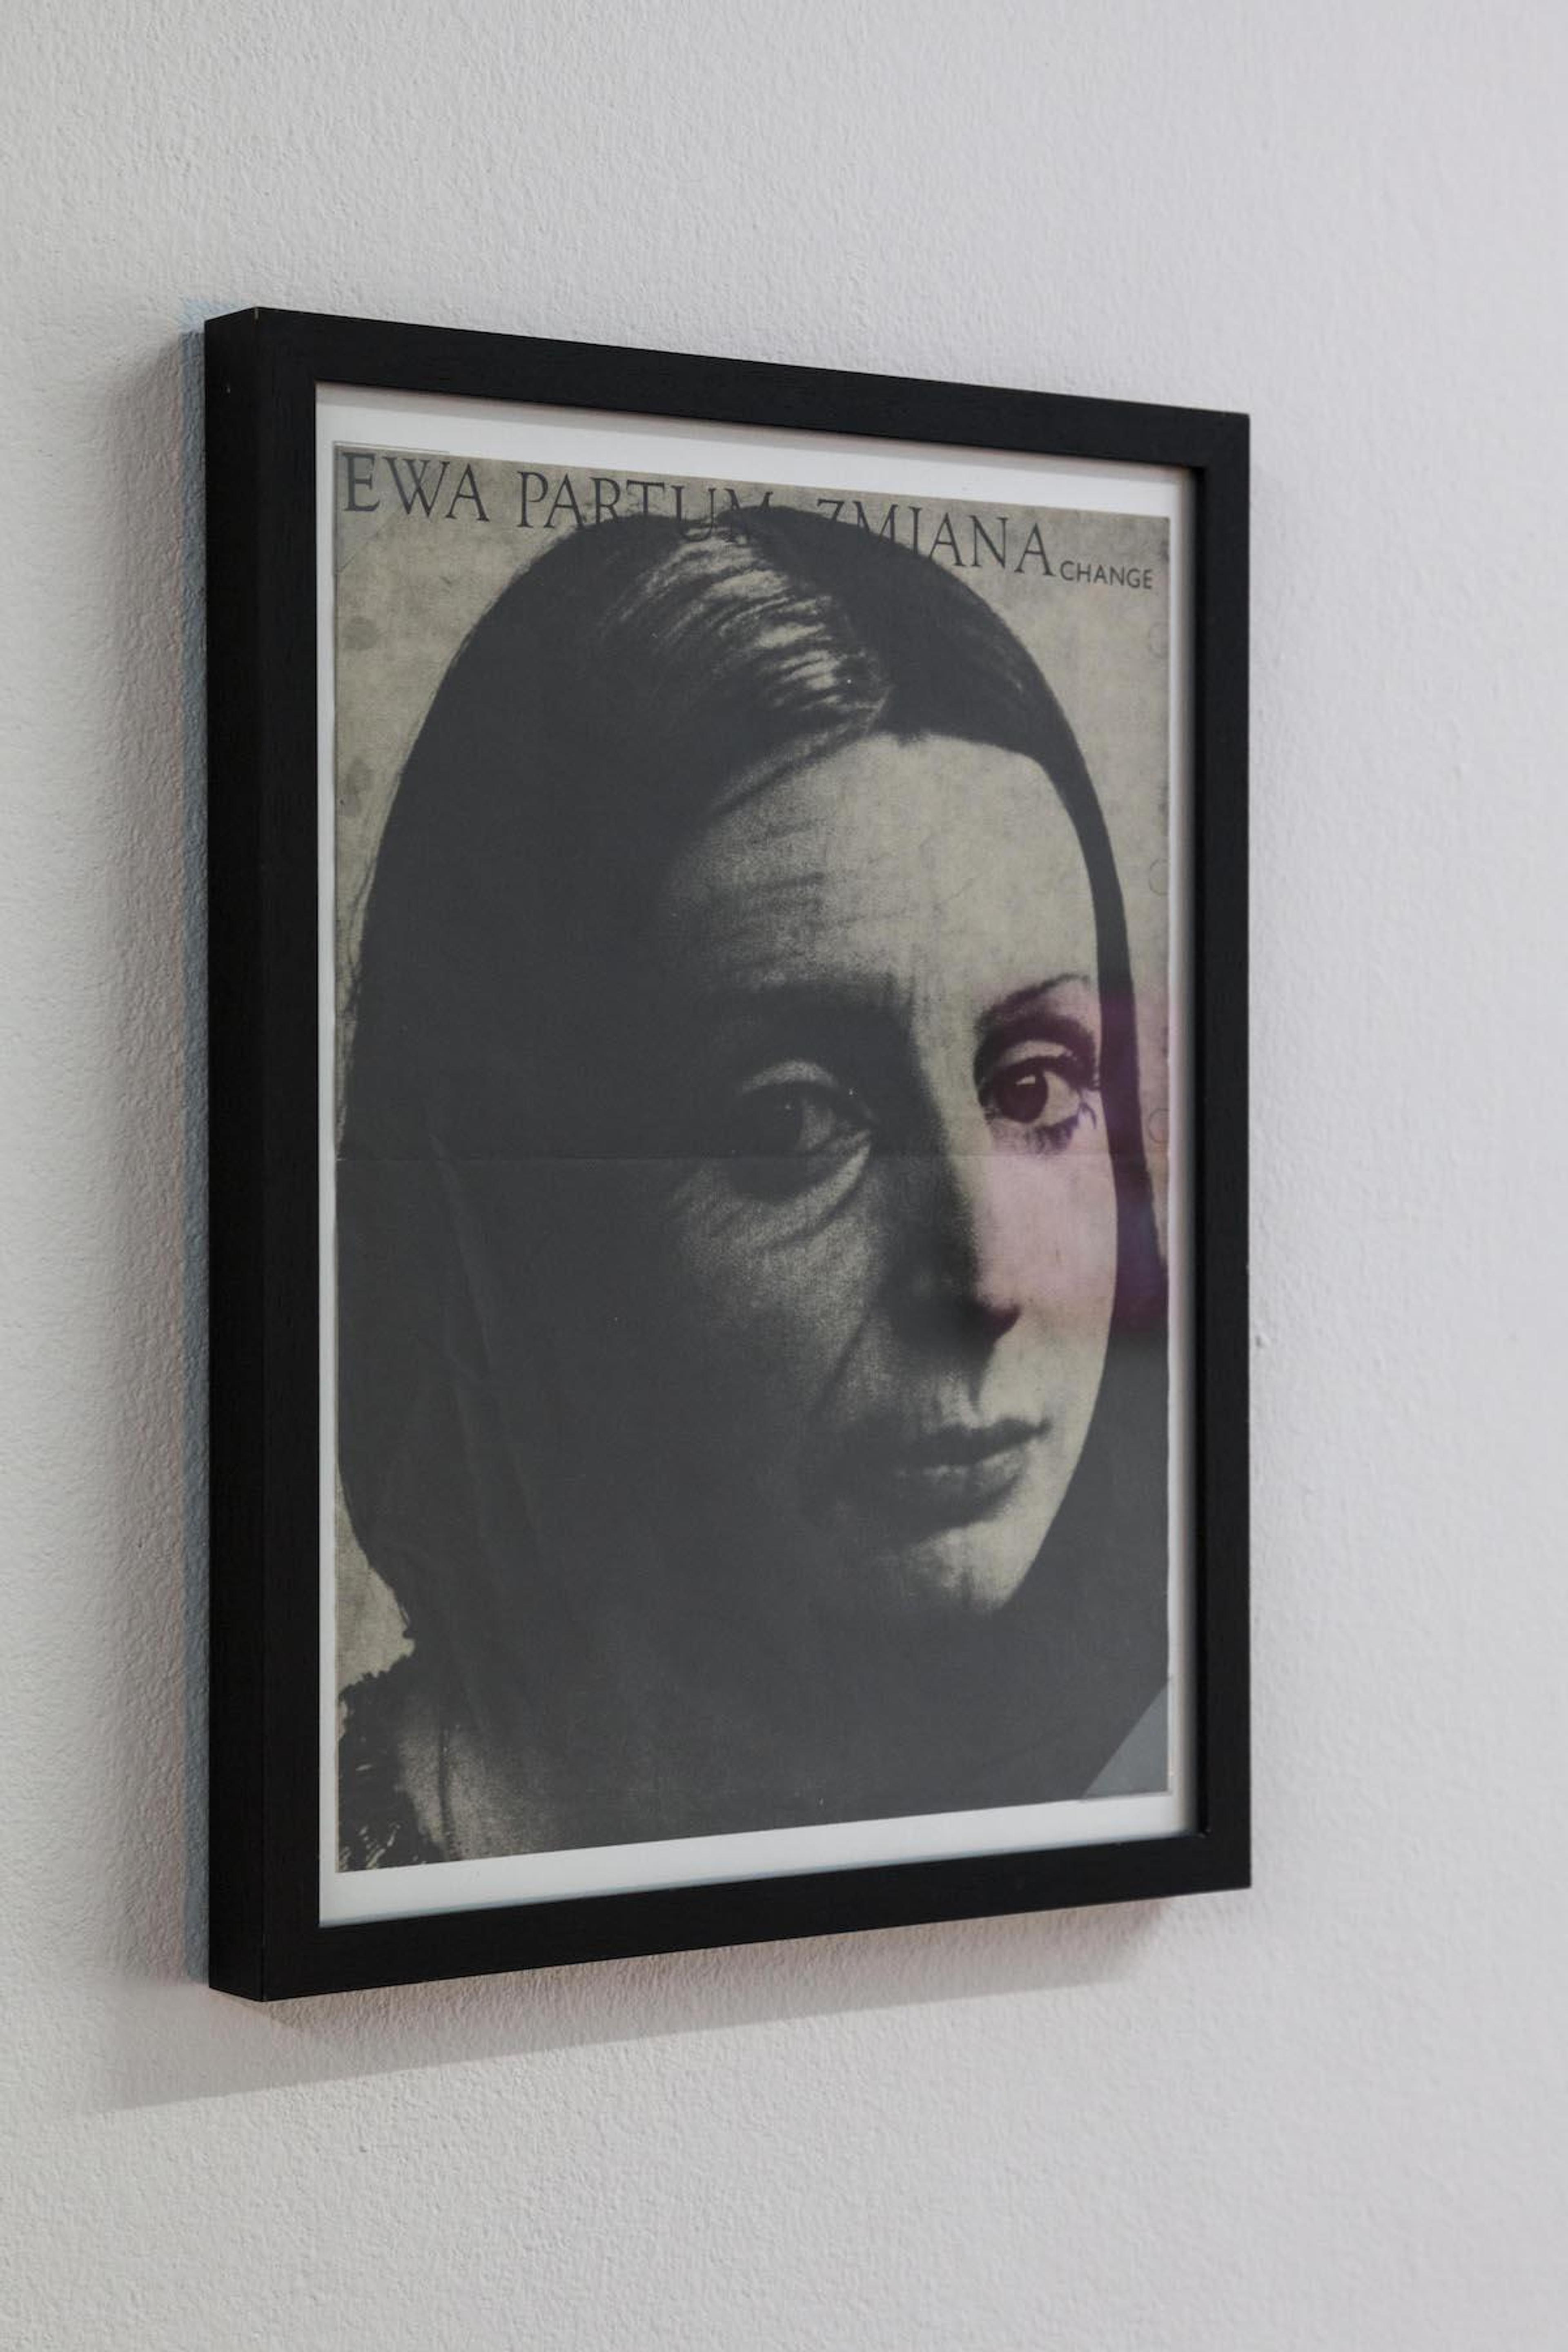 Ewa Partum Zmiana change, 1974, Offsetprint, signed on back, 36,5 x 27,5 cm, framed, Courtesy M + R Fricke, Berlin